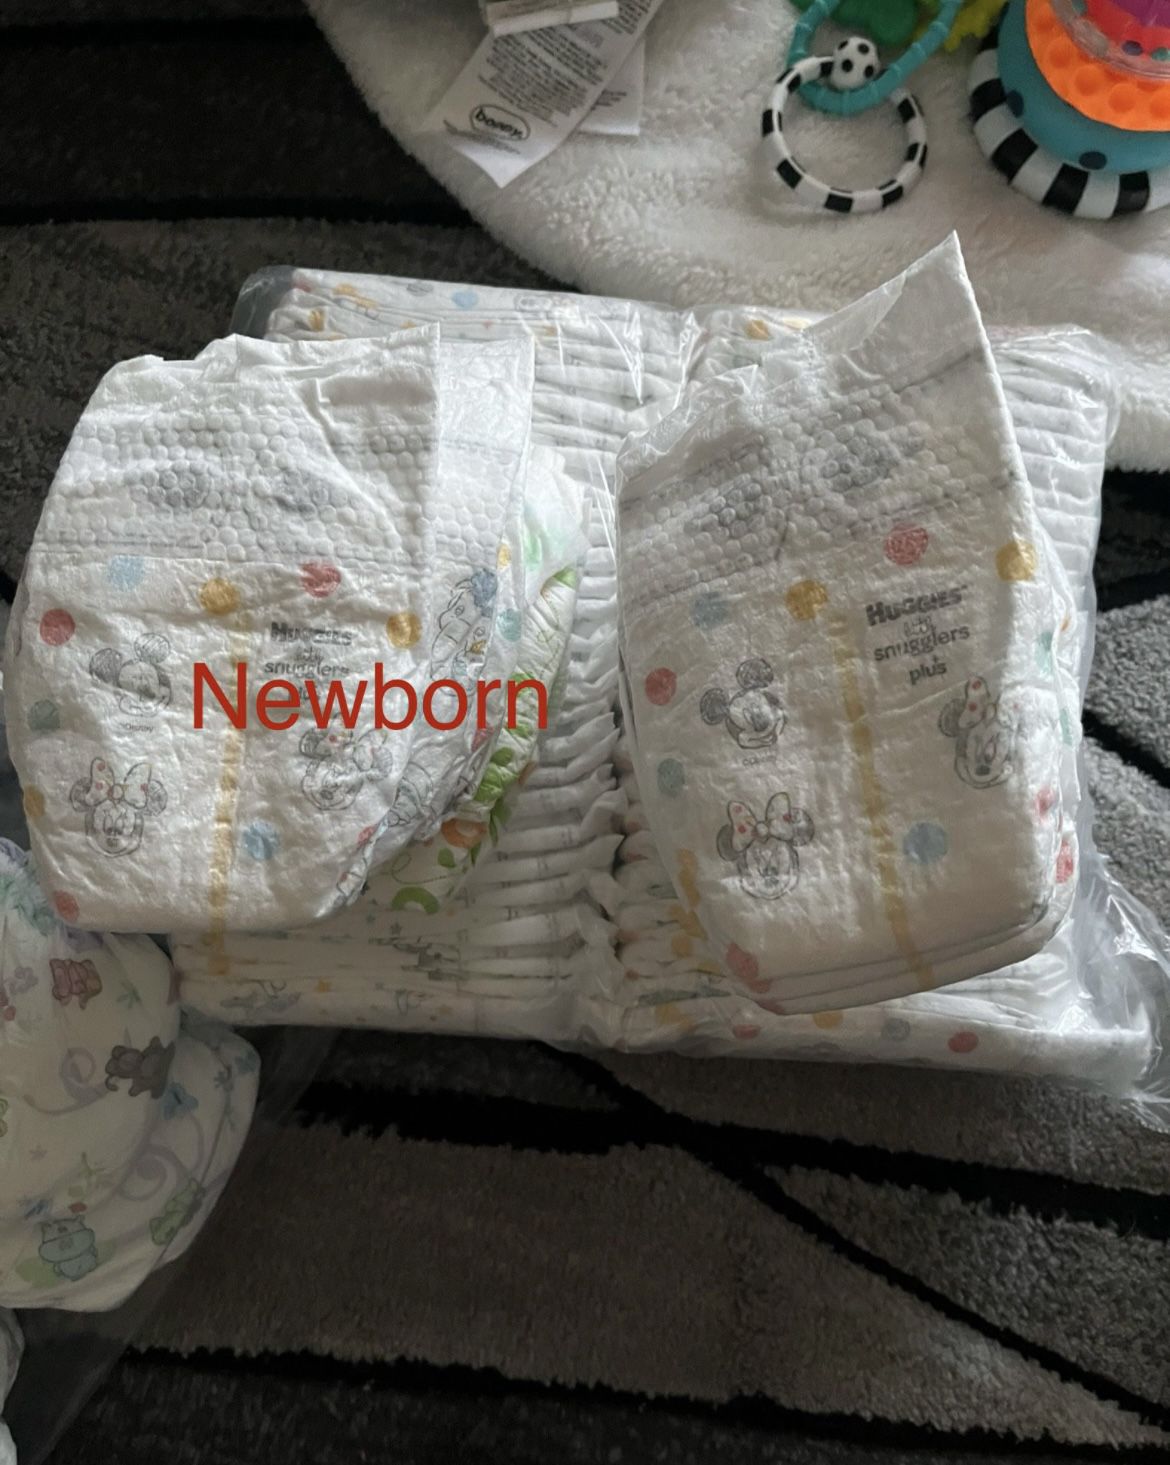 NEWBORN Diapers $10